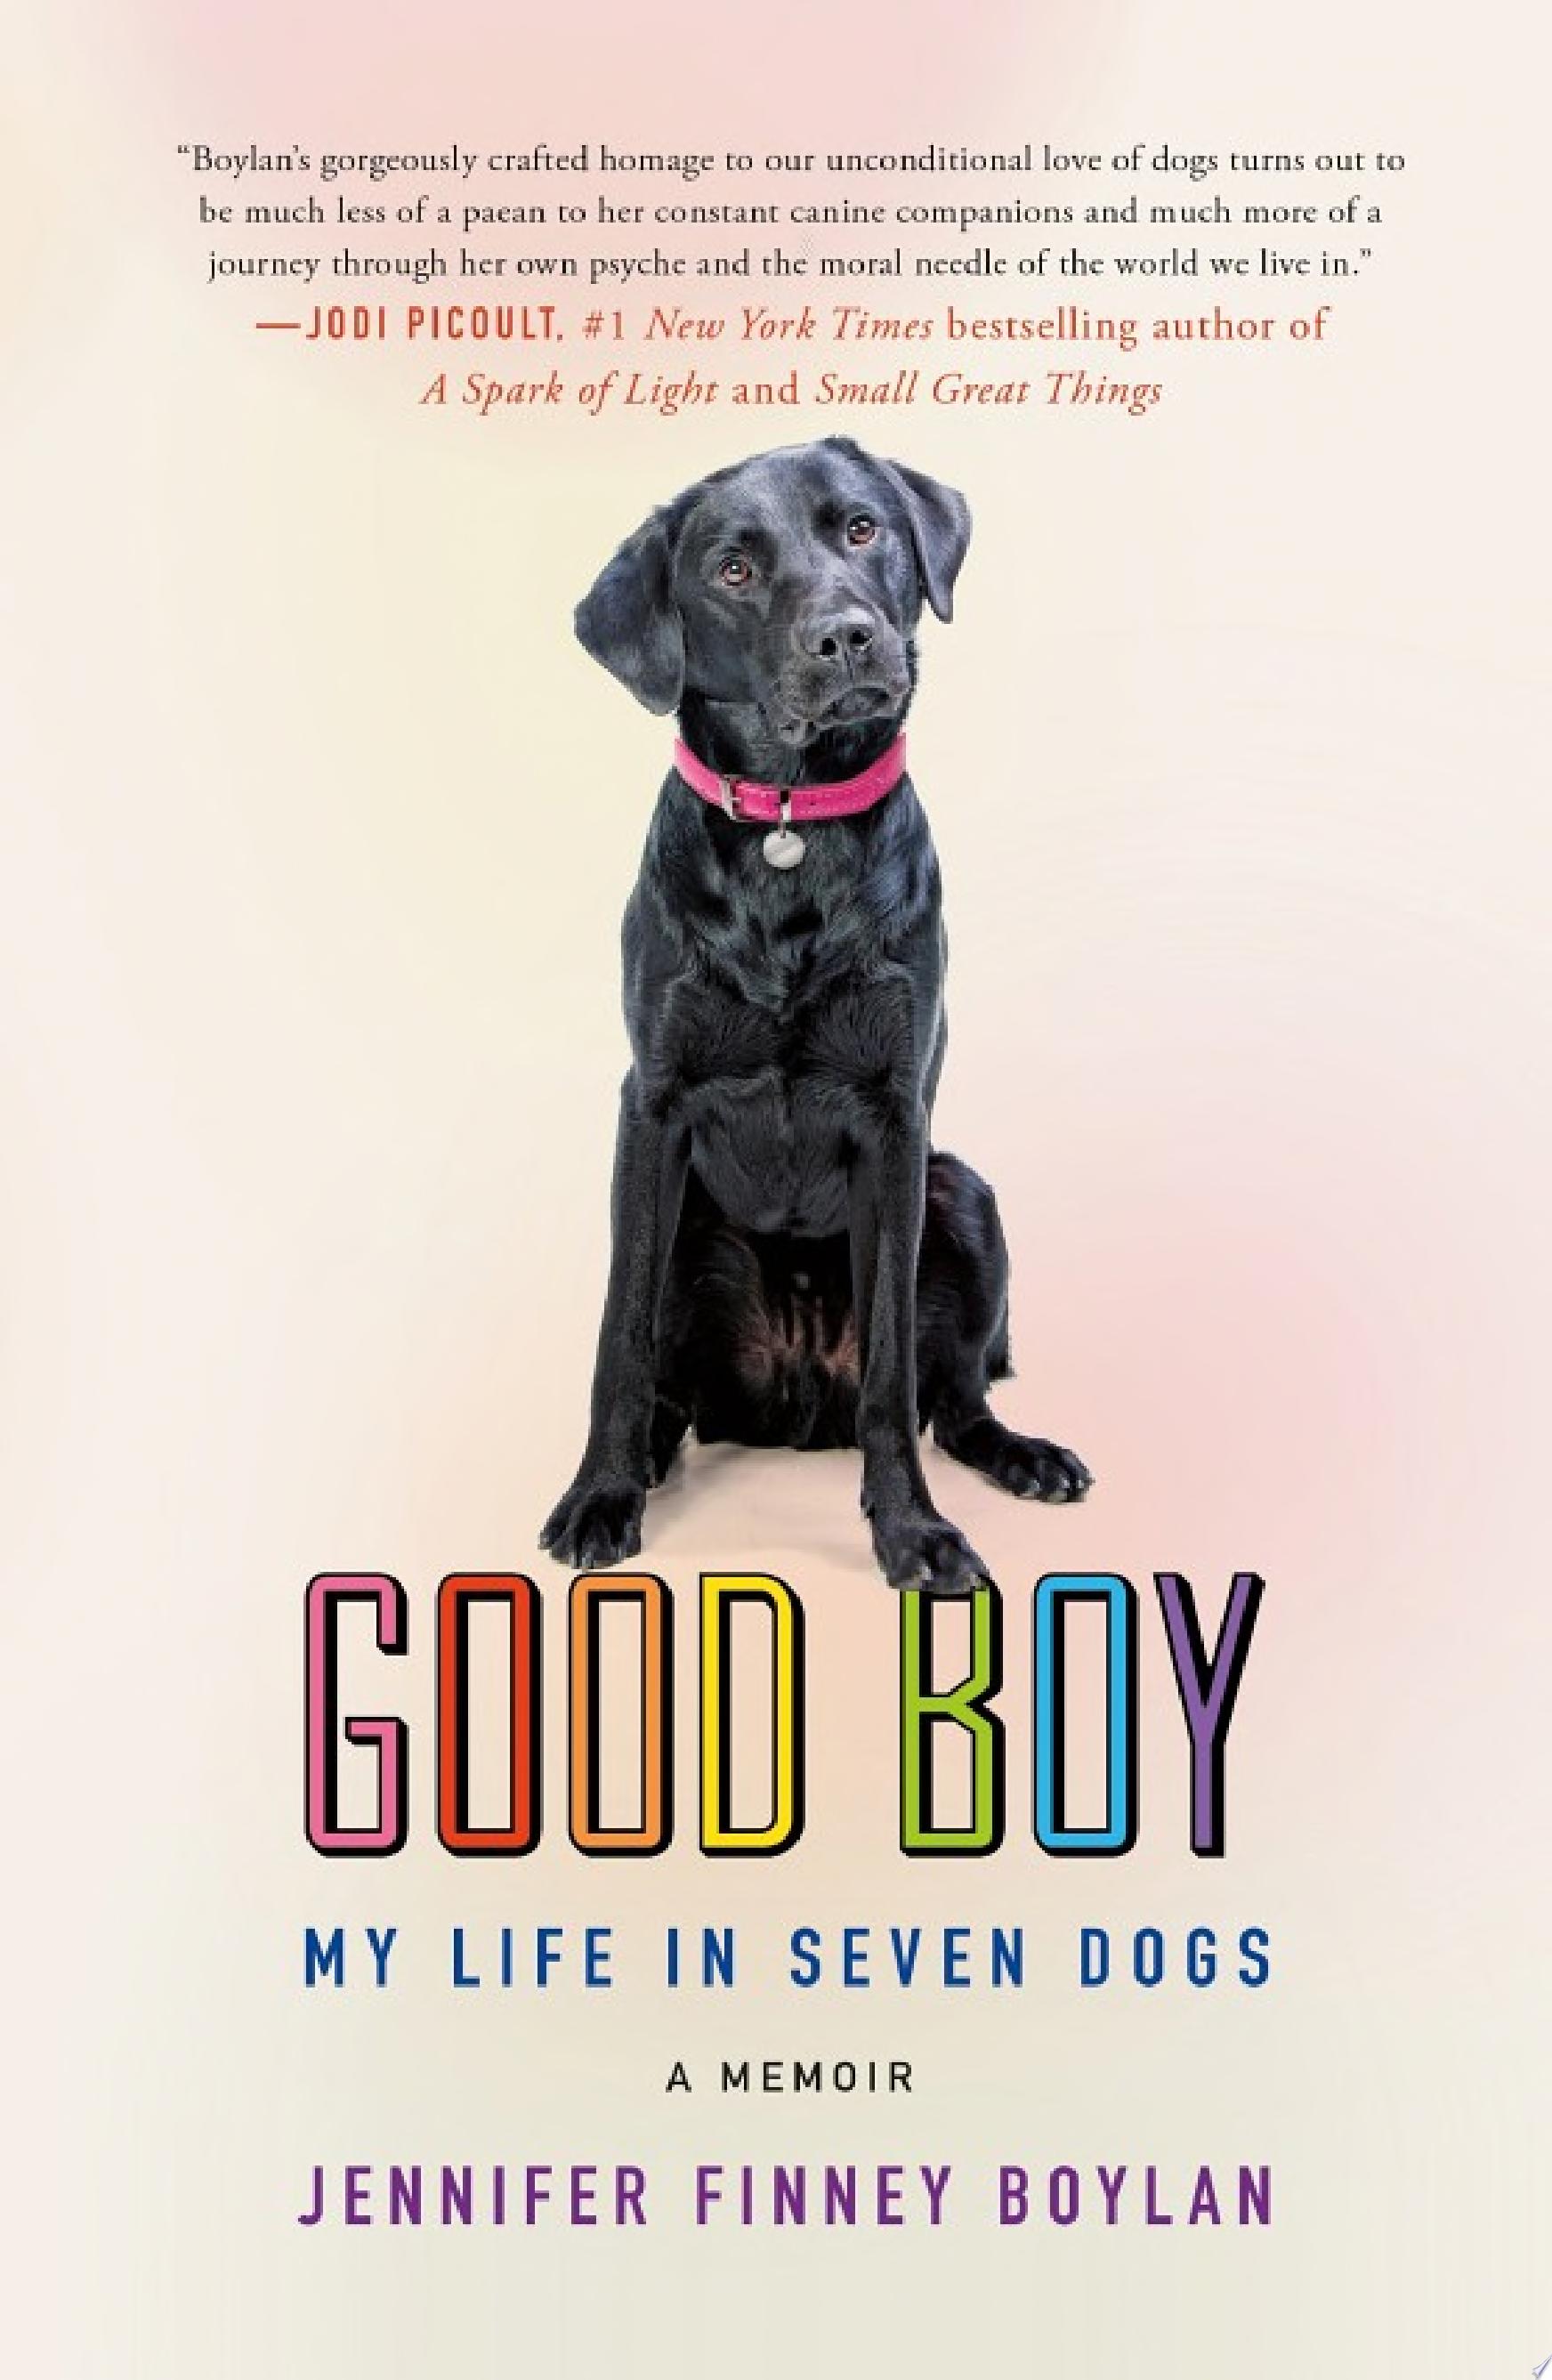 Image for "Good Boy"